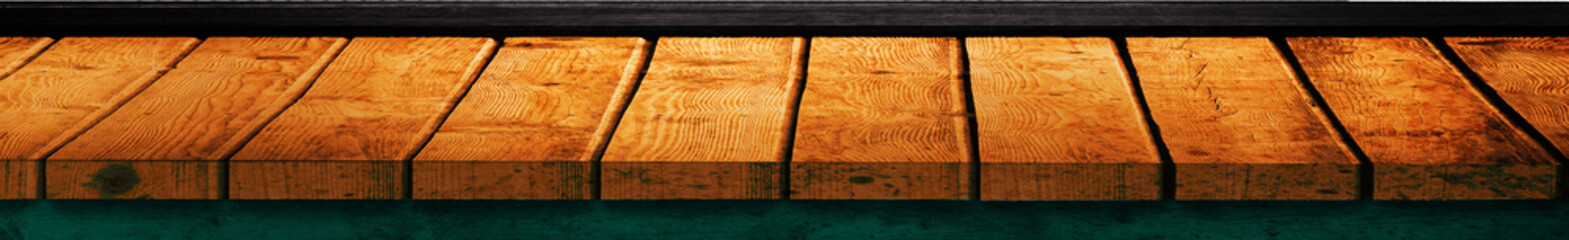 Image of orange wooden planks